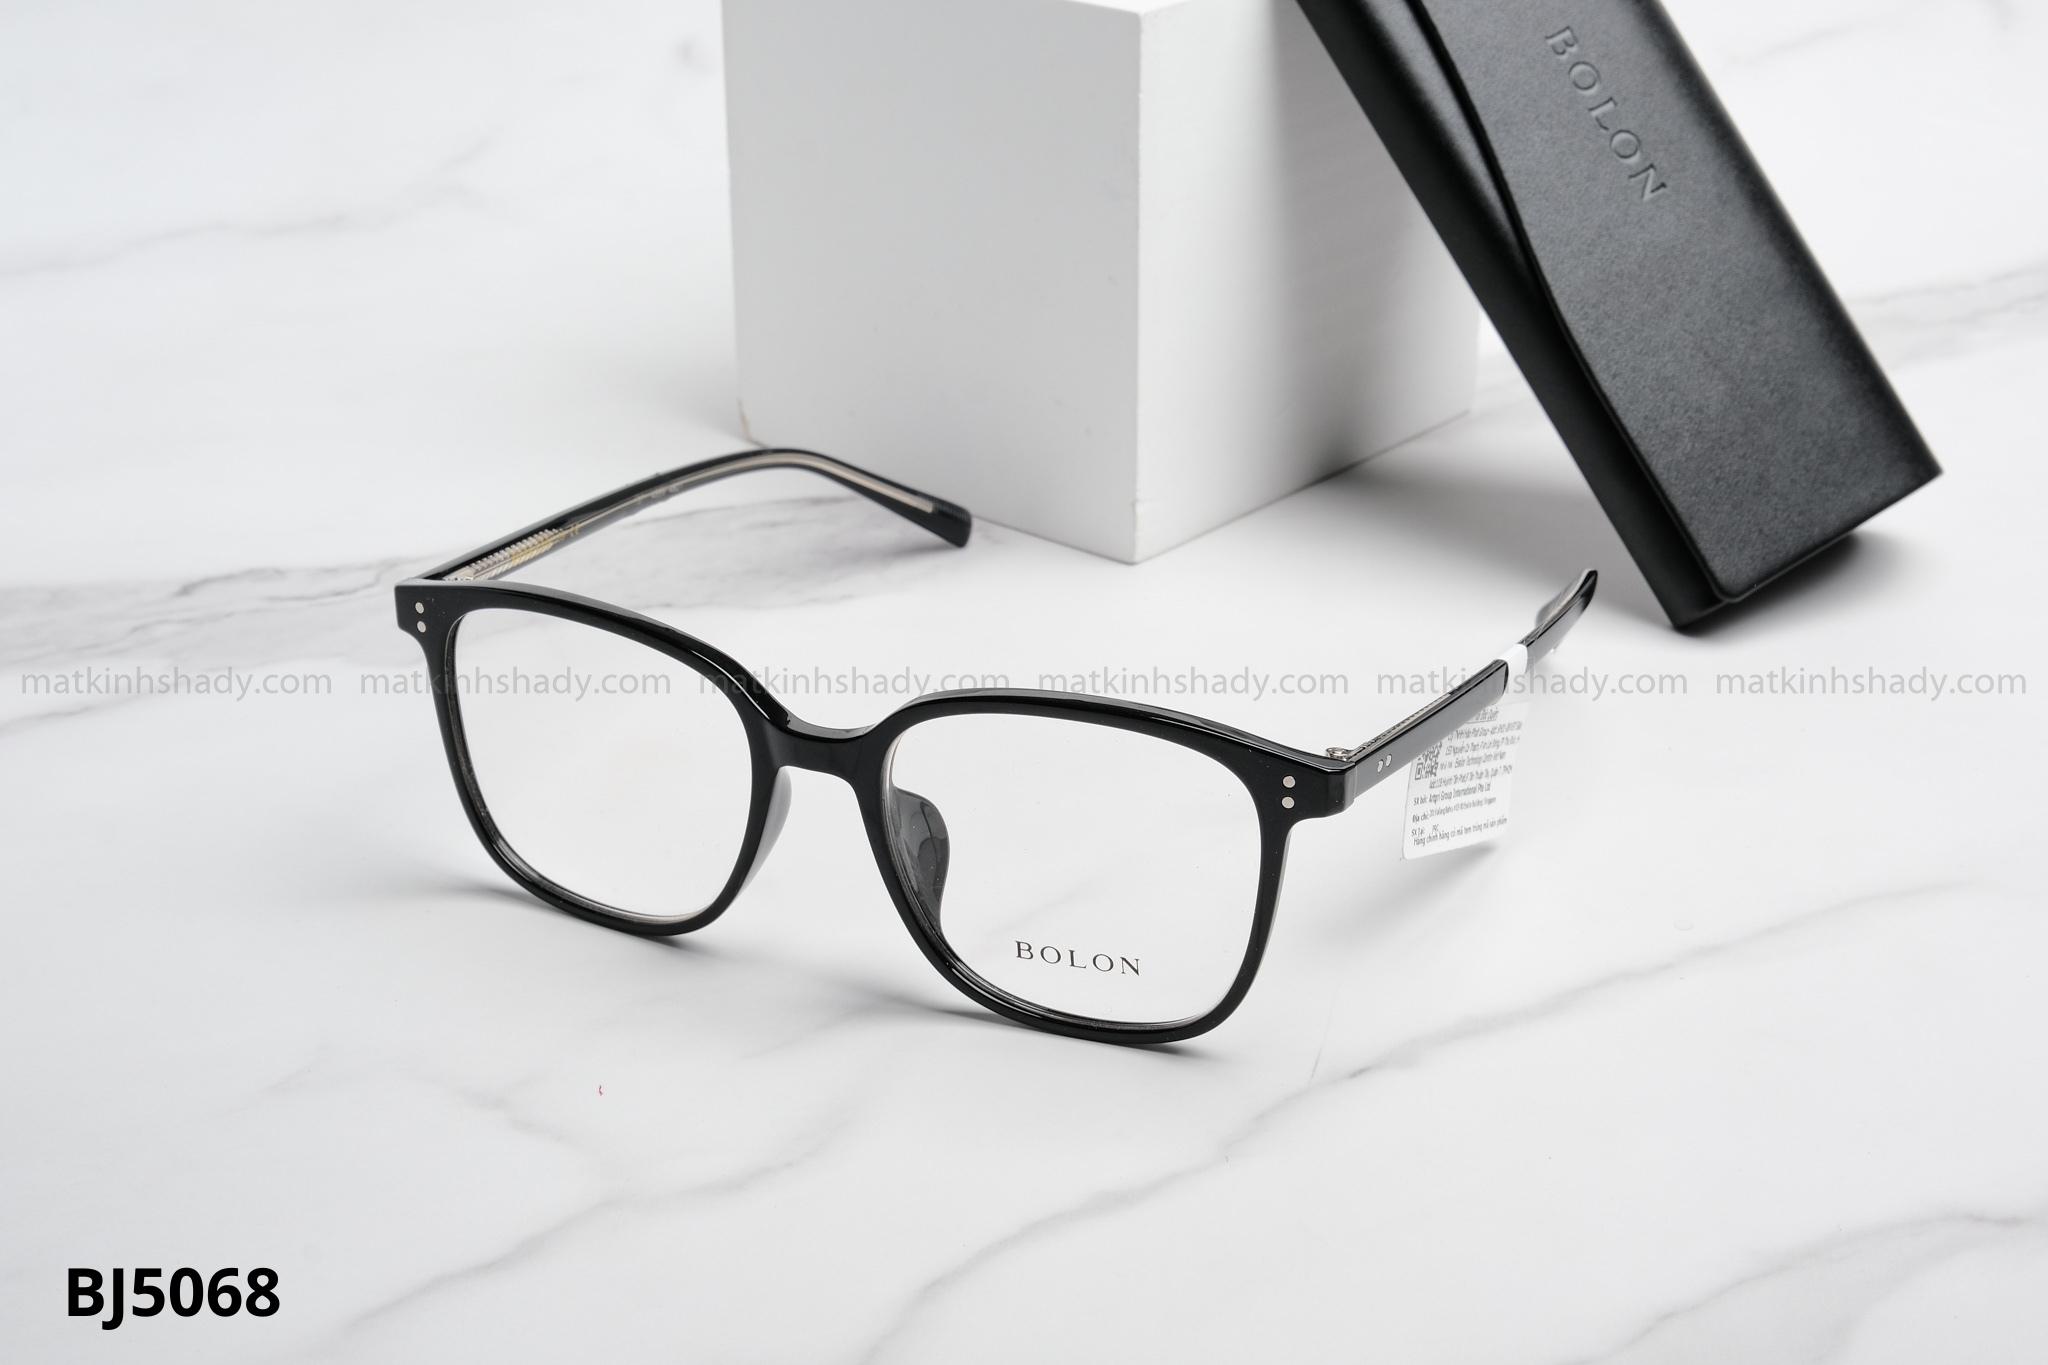  Bolon Eyewear - Glasses - BJ5068 